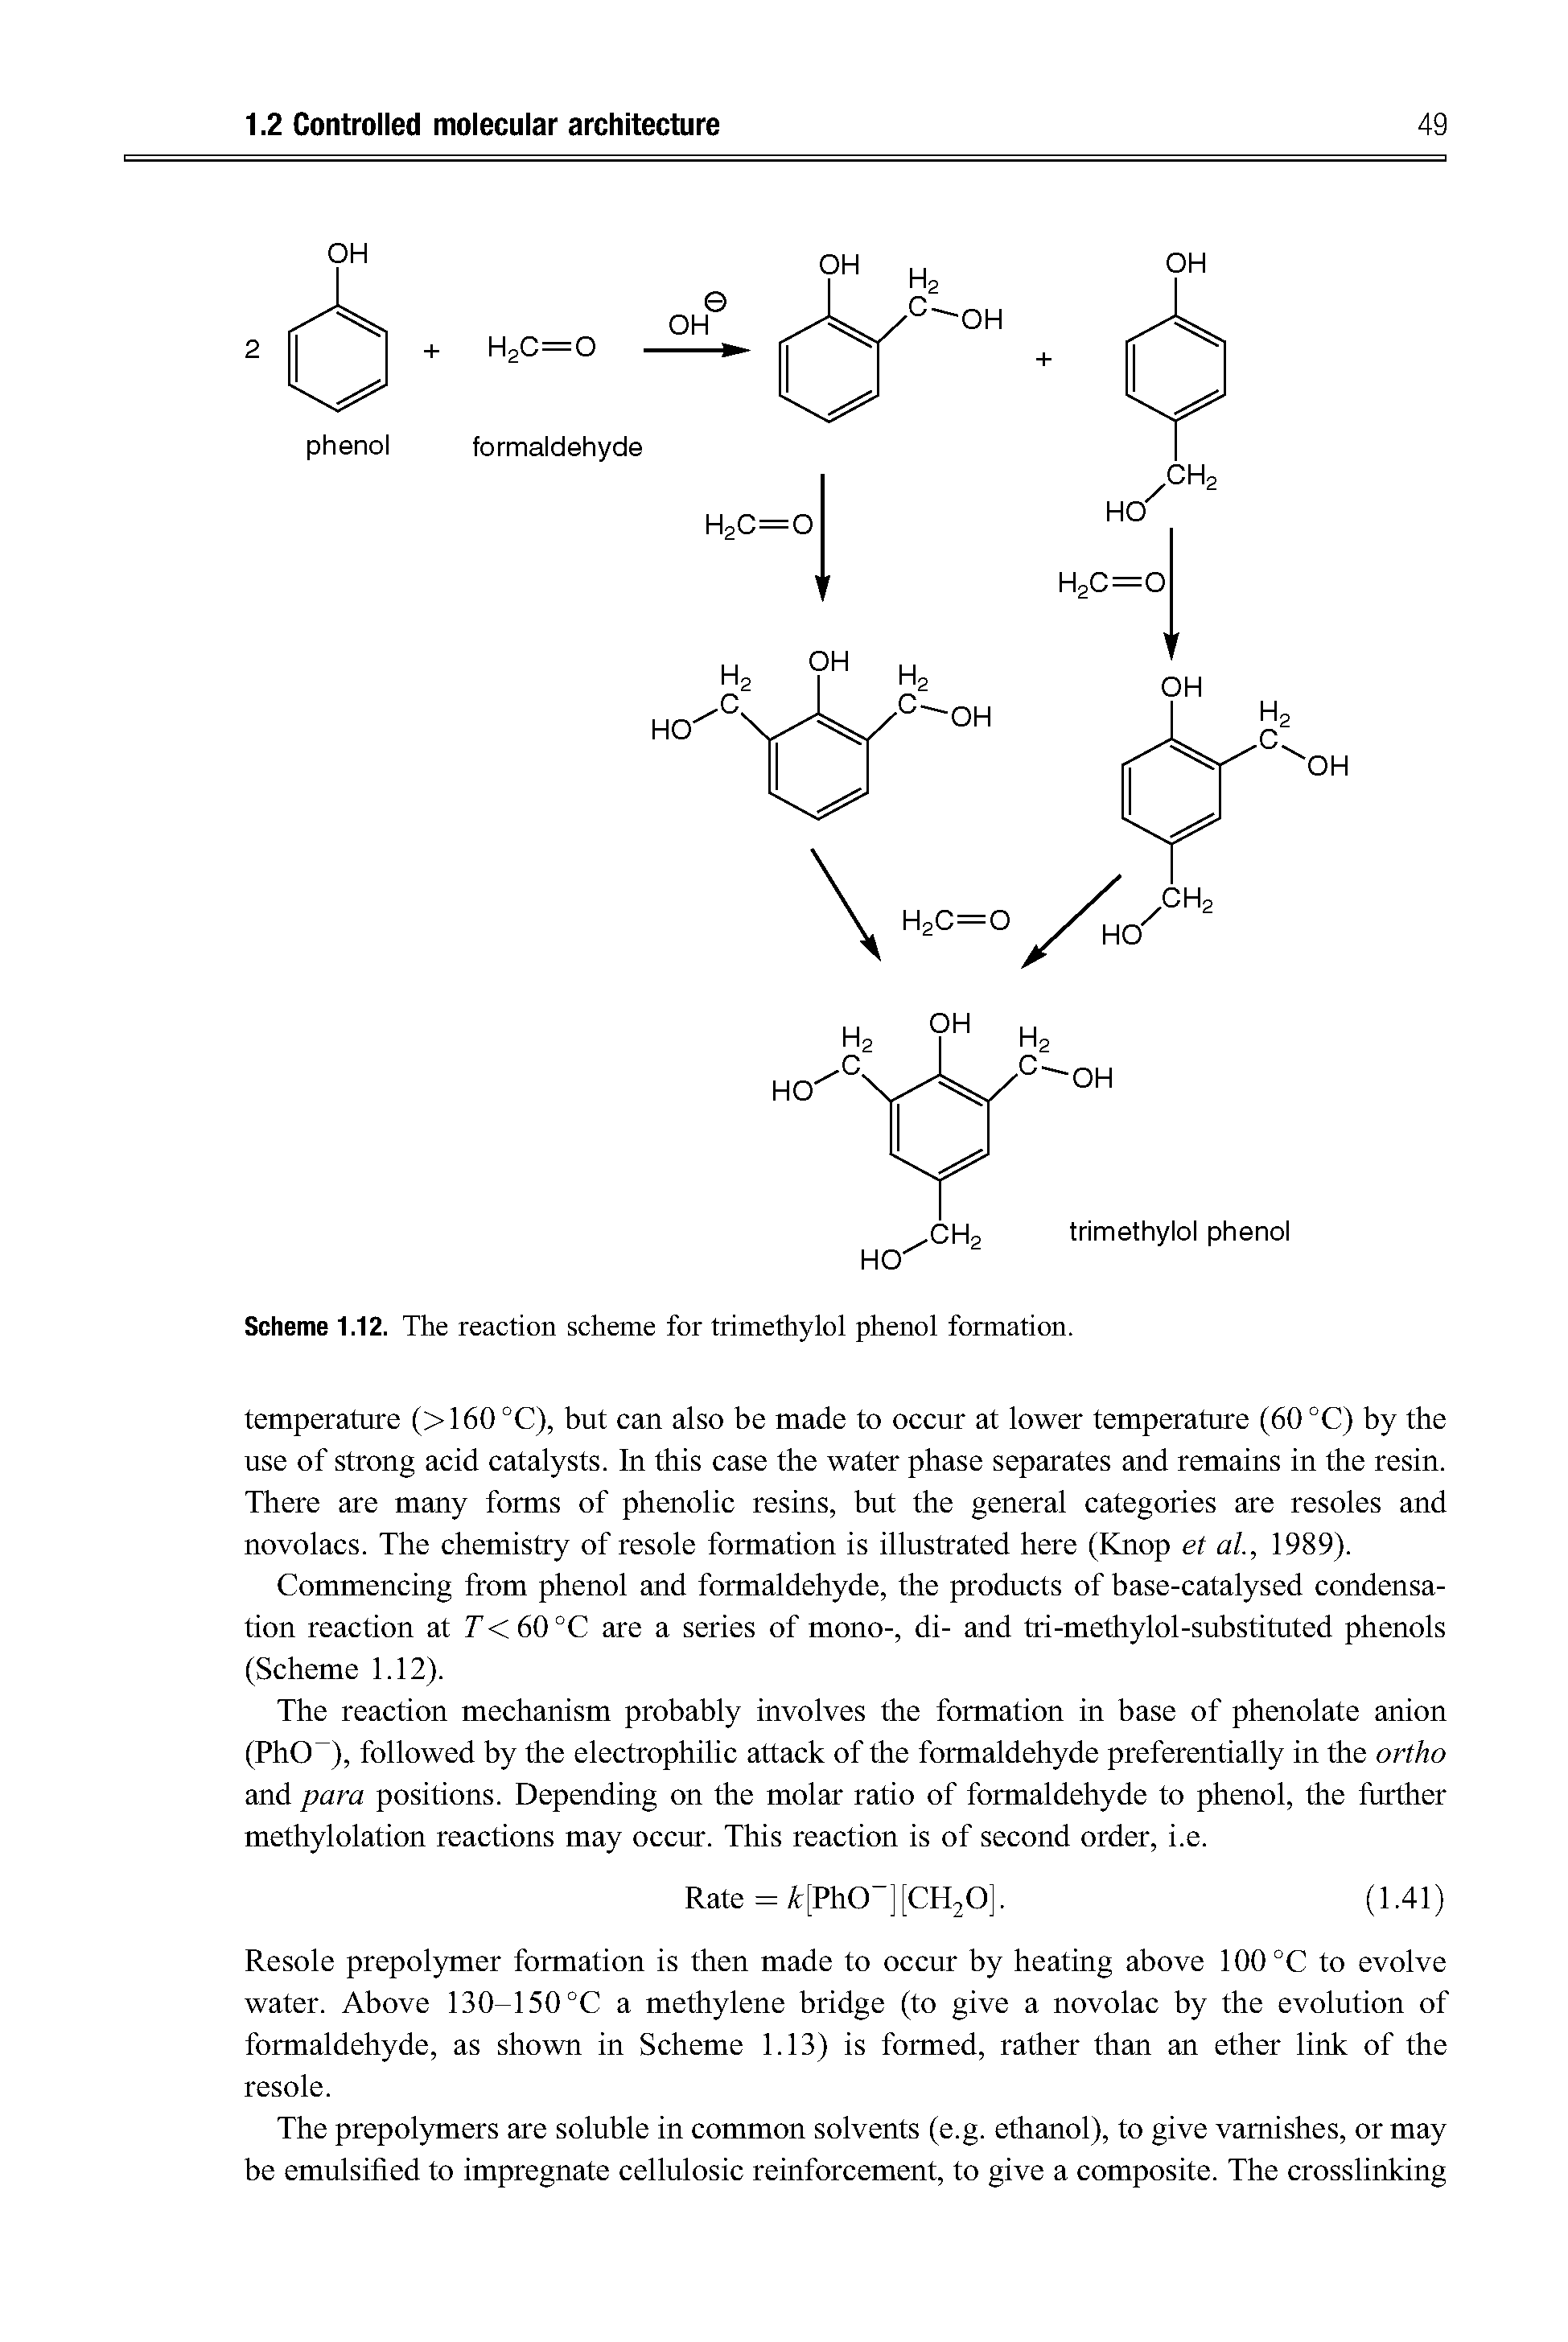 Scheme 1.12. The reaction scheme for trimethylol phenol formation.